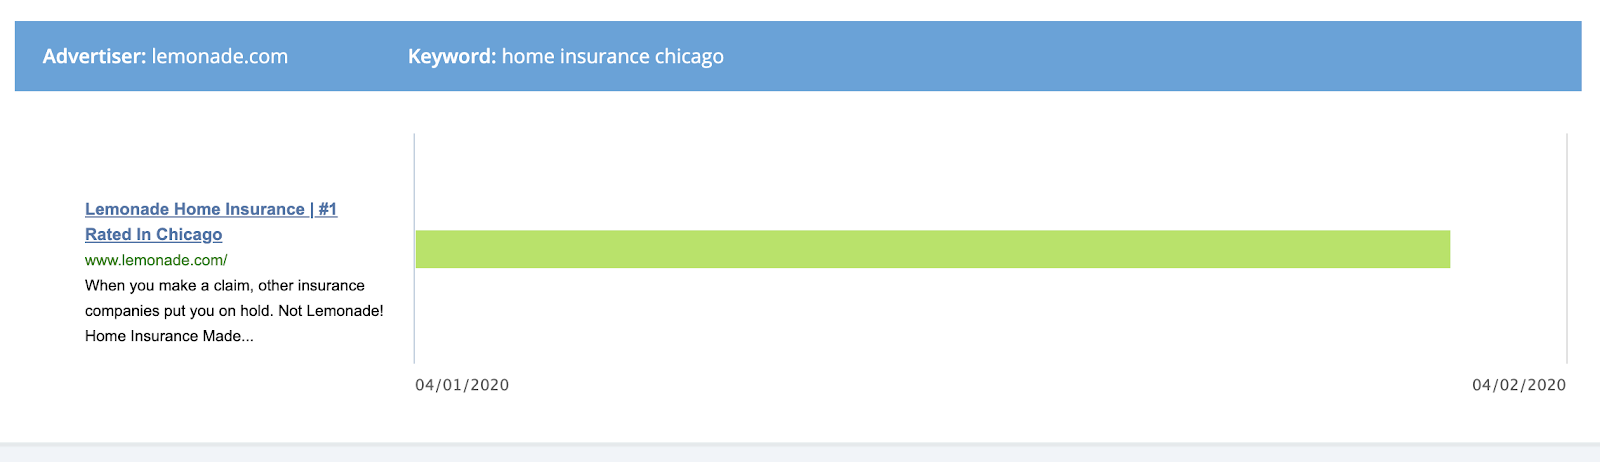 Lemonade ad: Home insurance Chicago